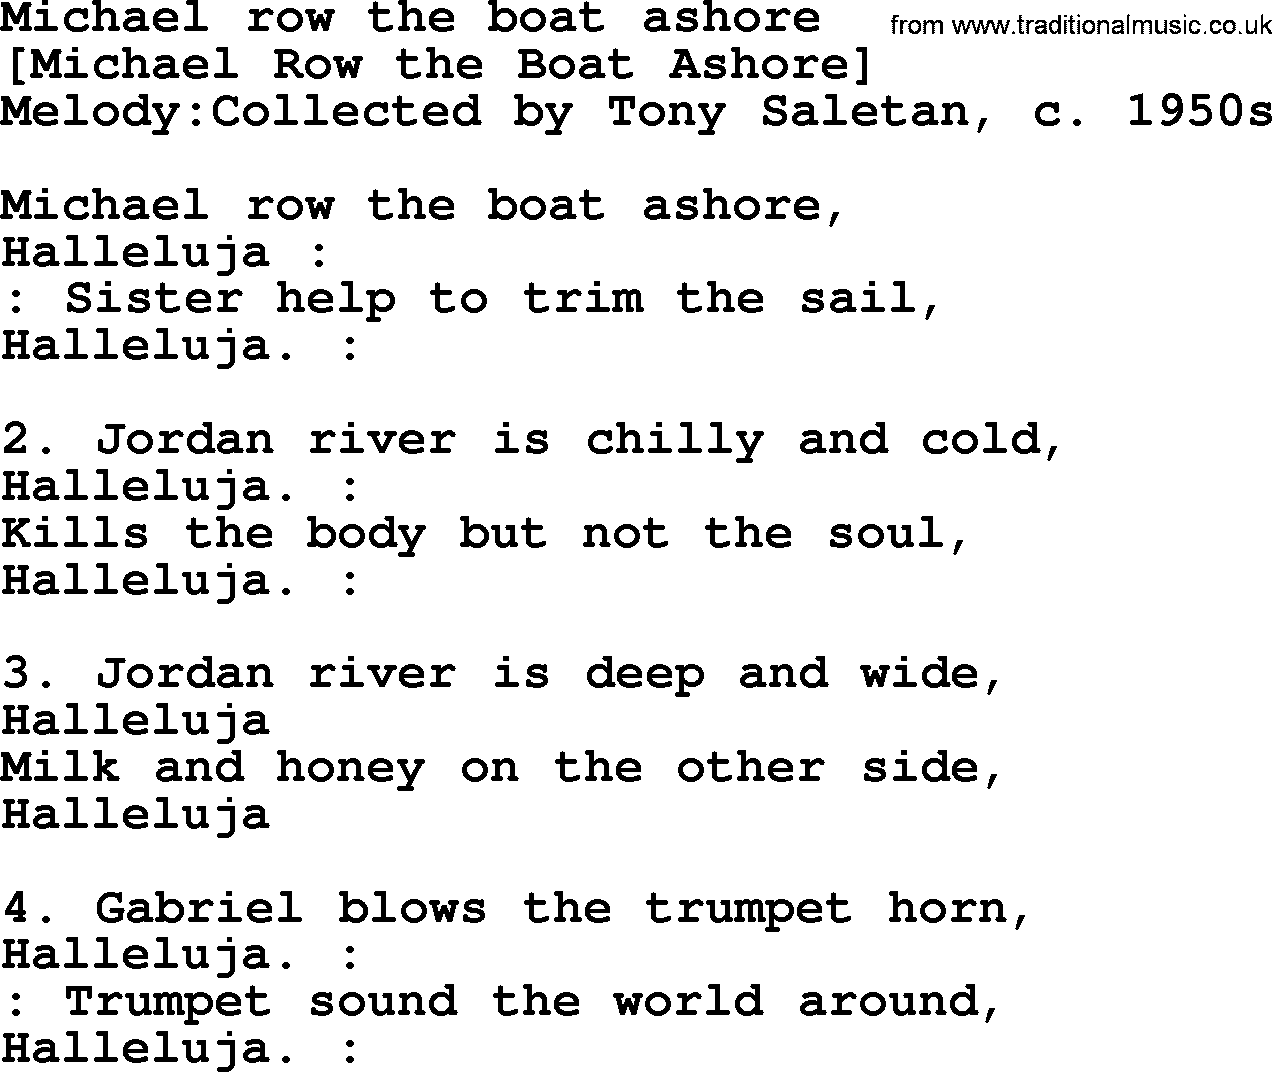 Old American Song: Michael Row The Boat Ashore, lyrics